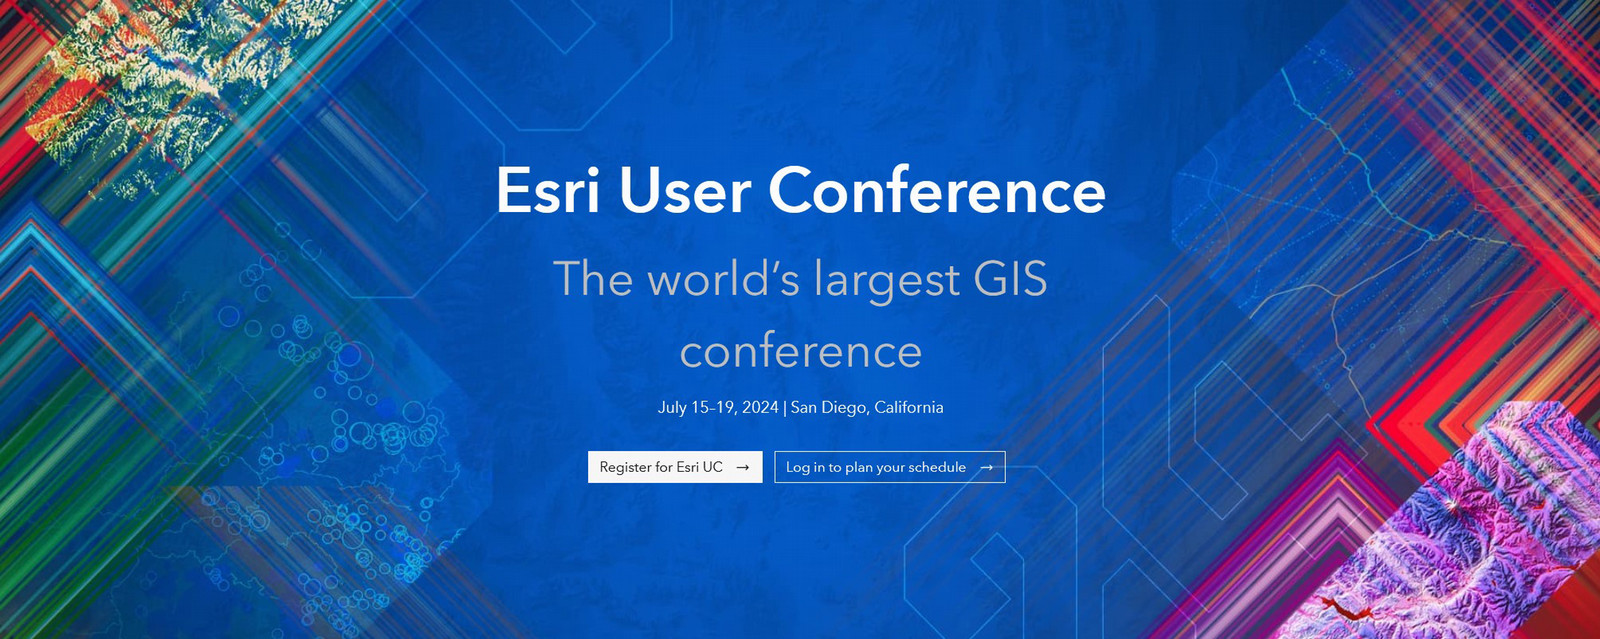 Esri User Conference Home Page Capture